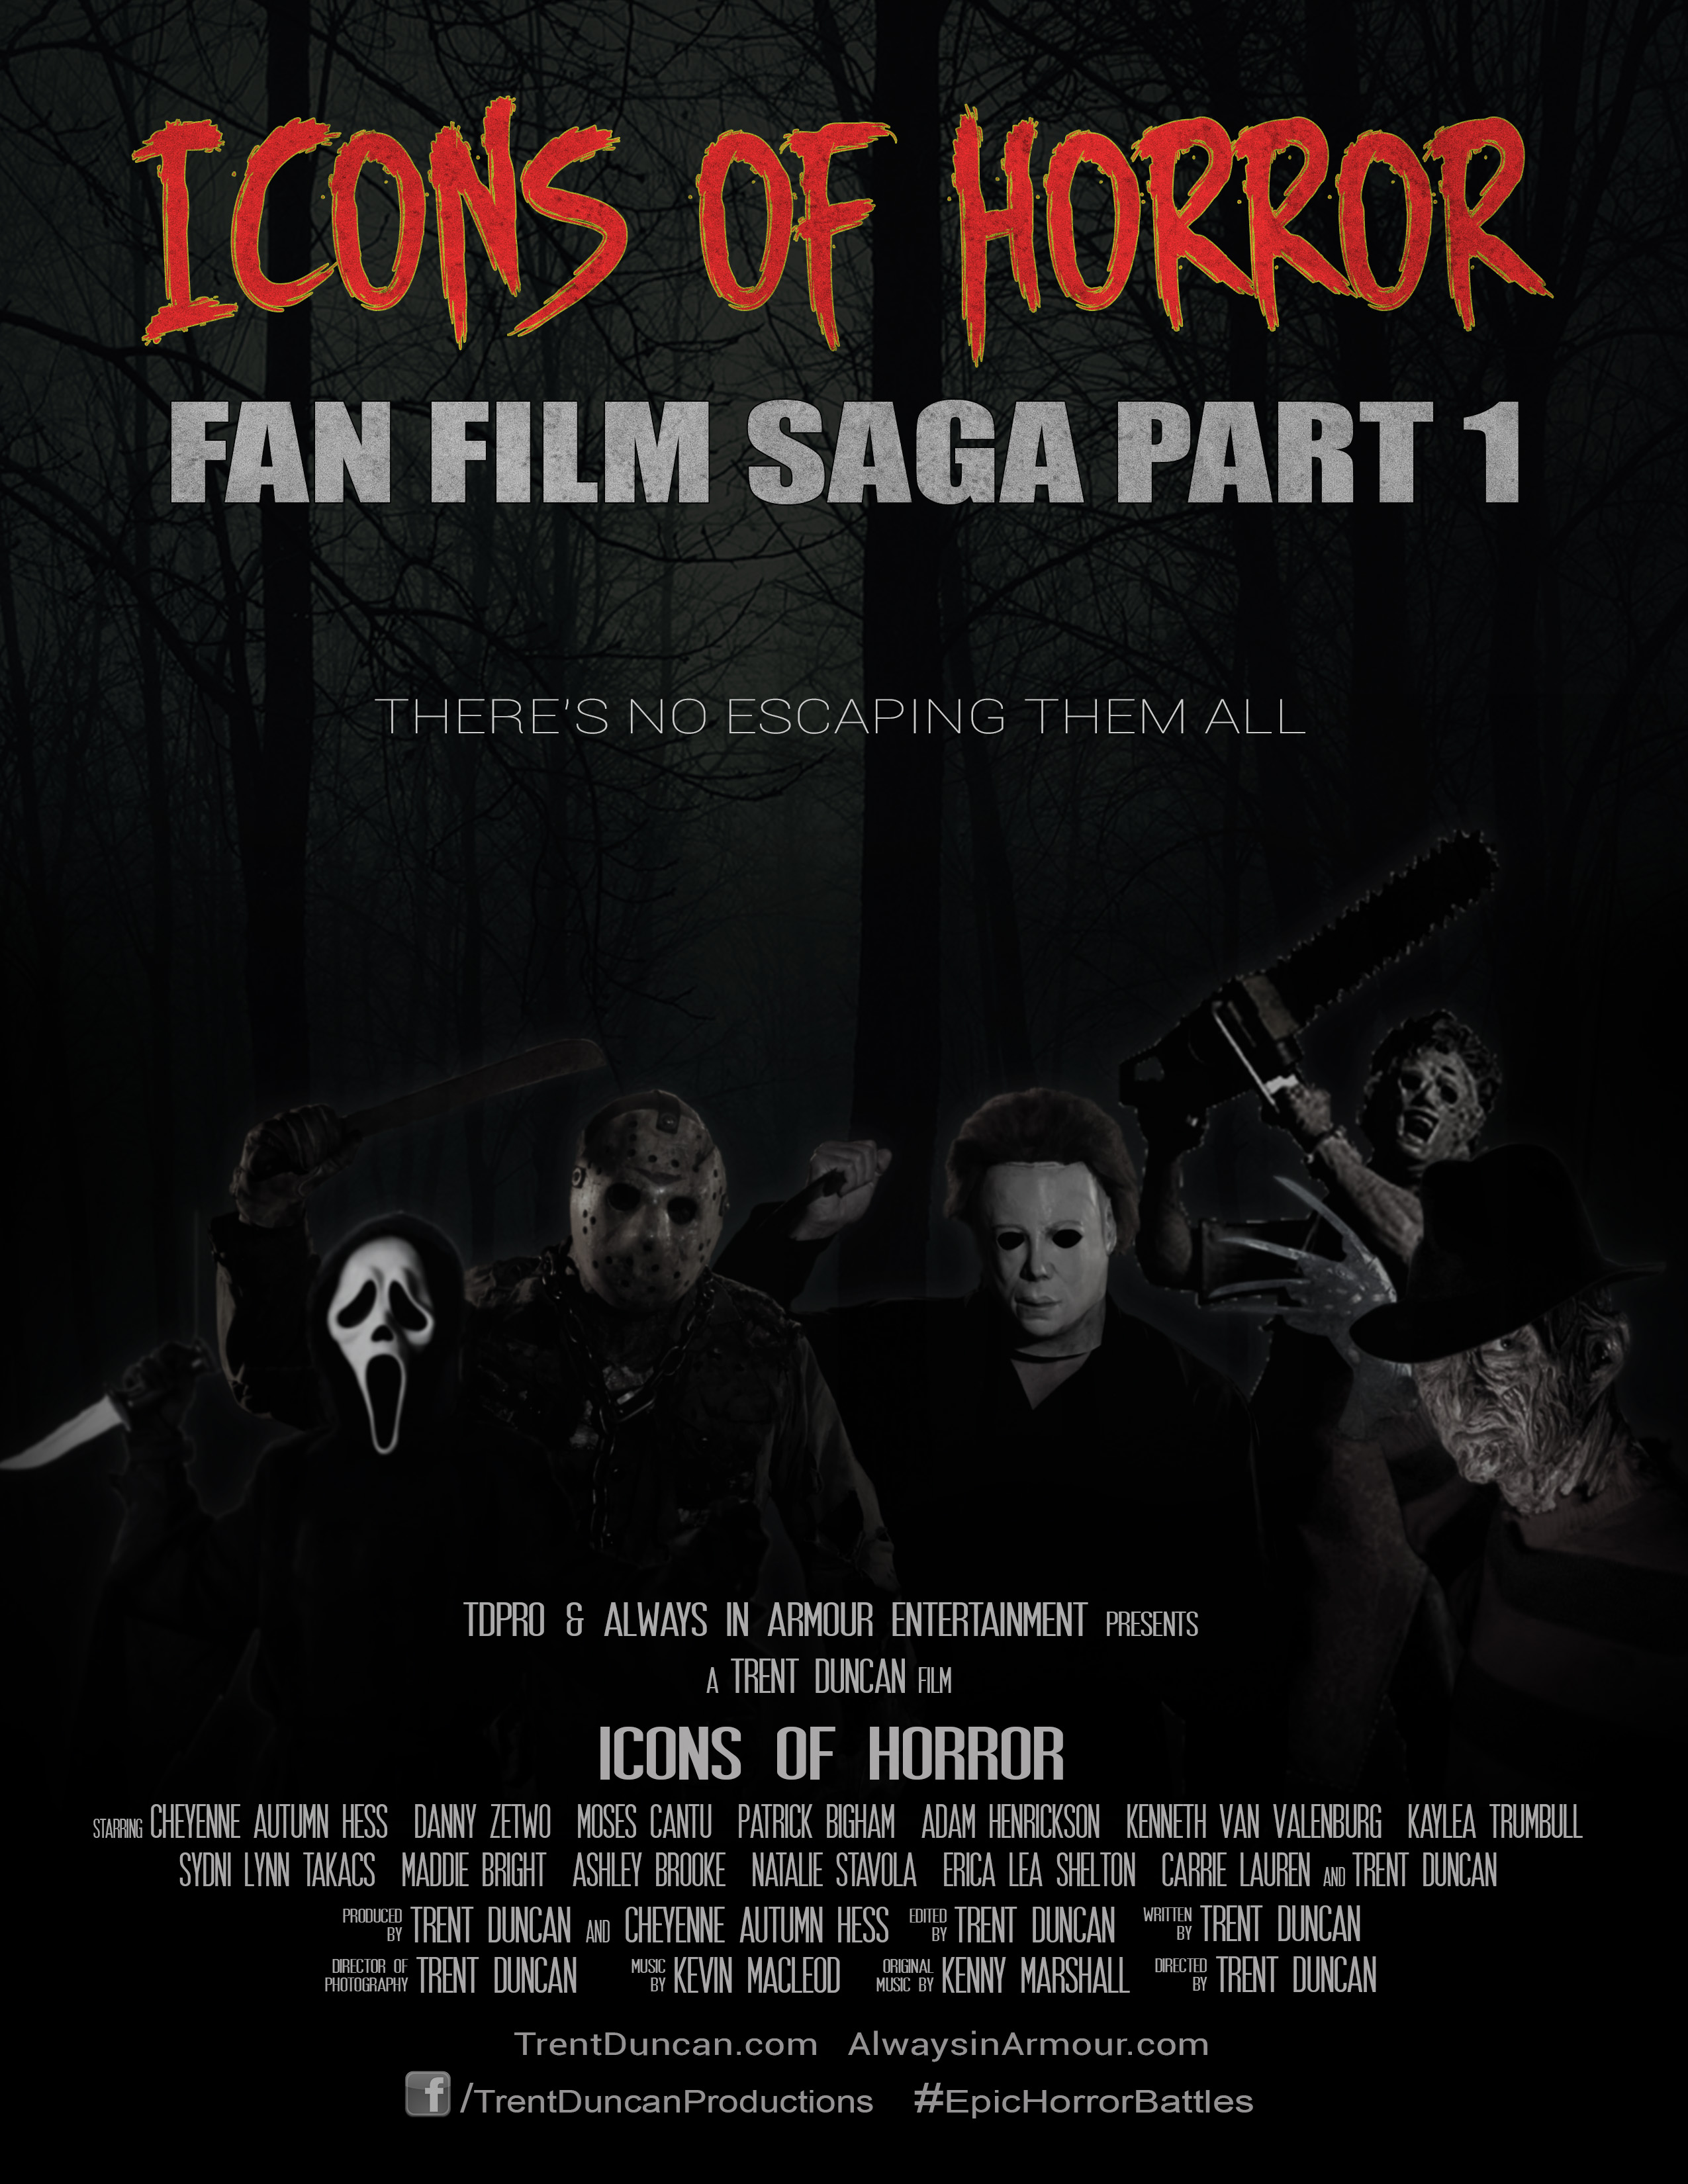 Fan Film Saga Part 1: Icons of Horror